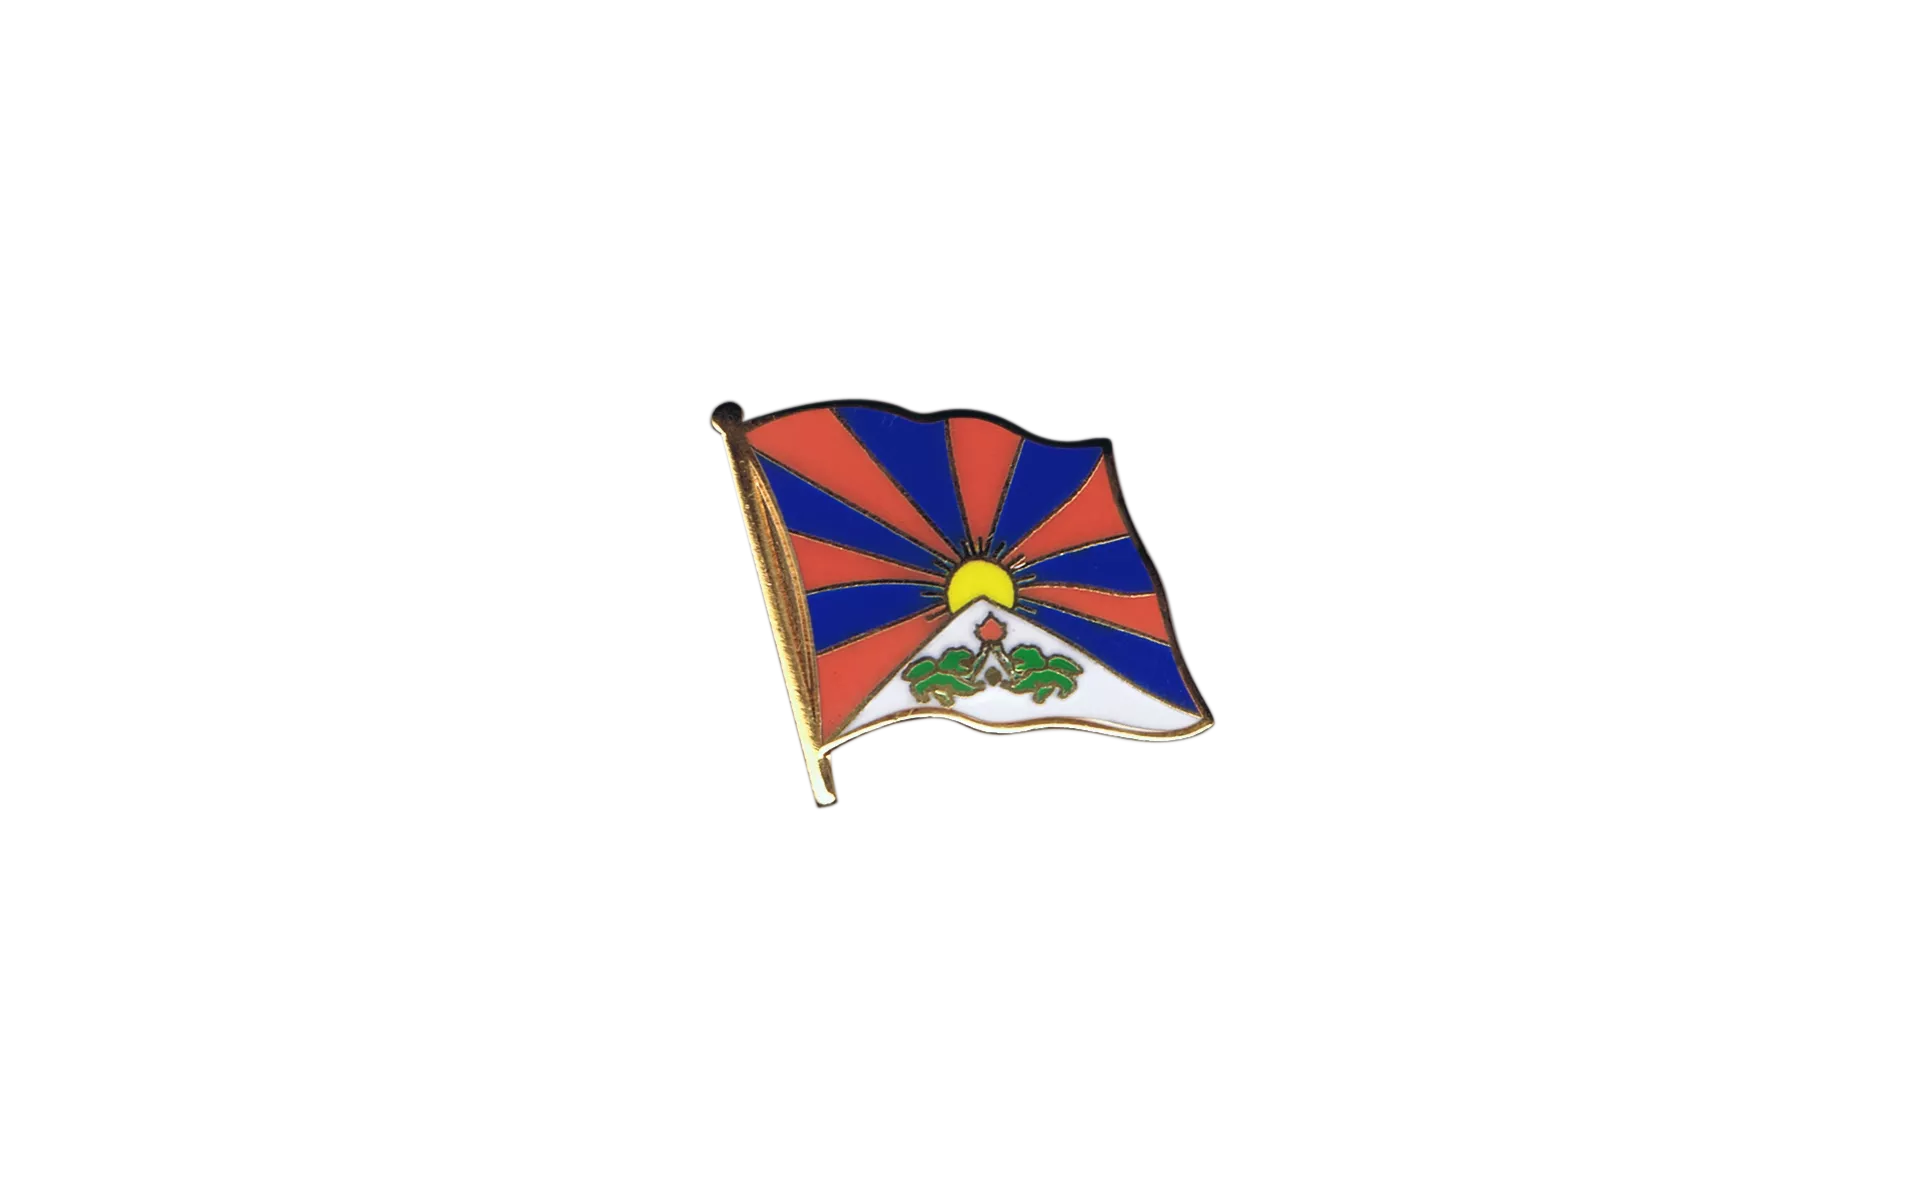 Buy Tibet flag pins at a fantastic price